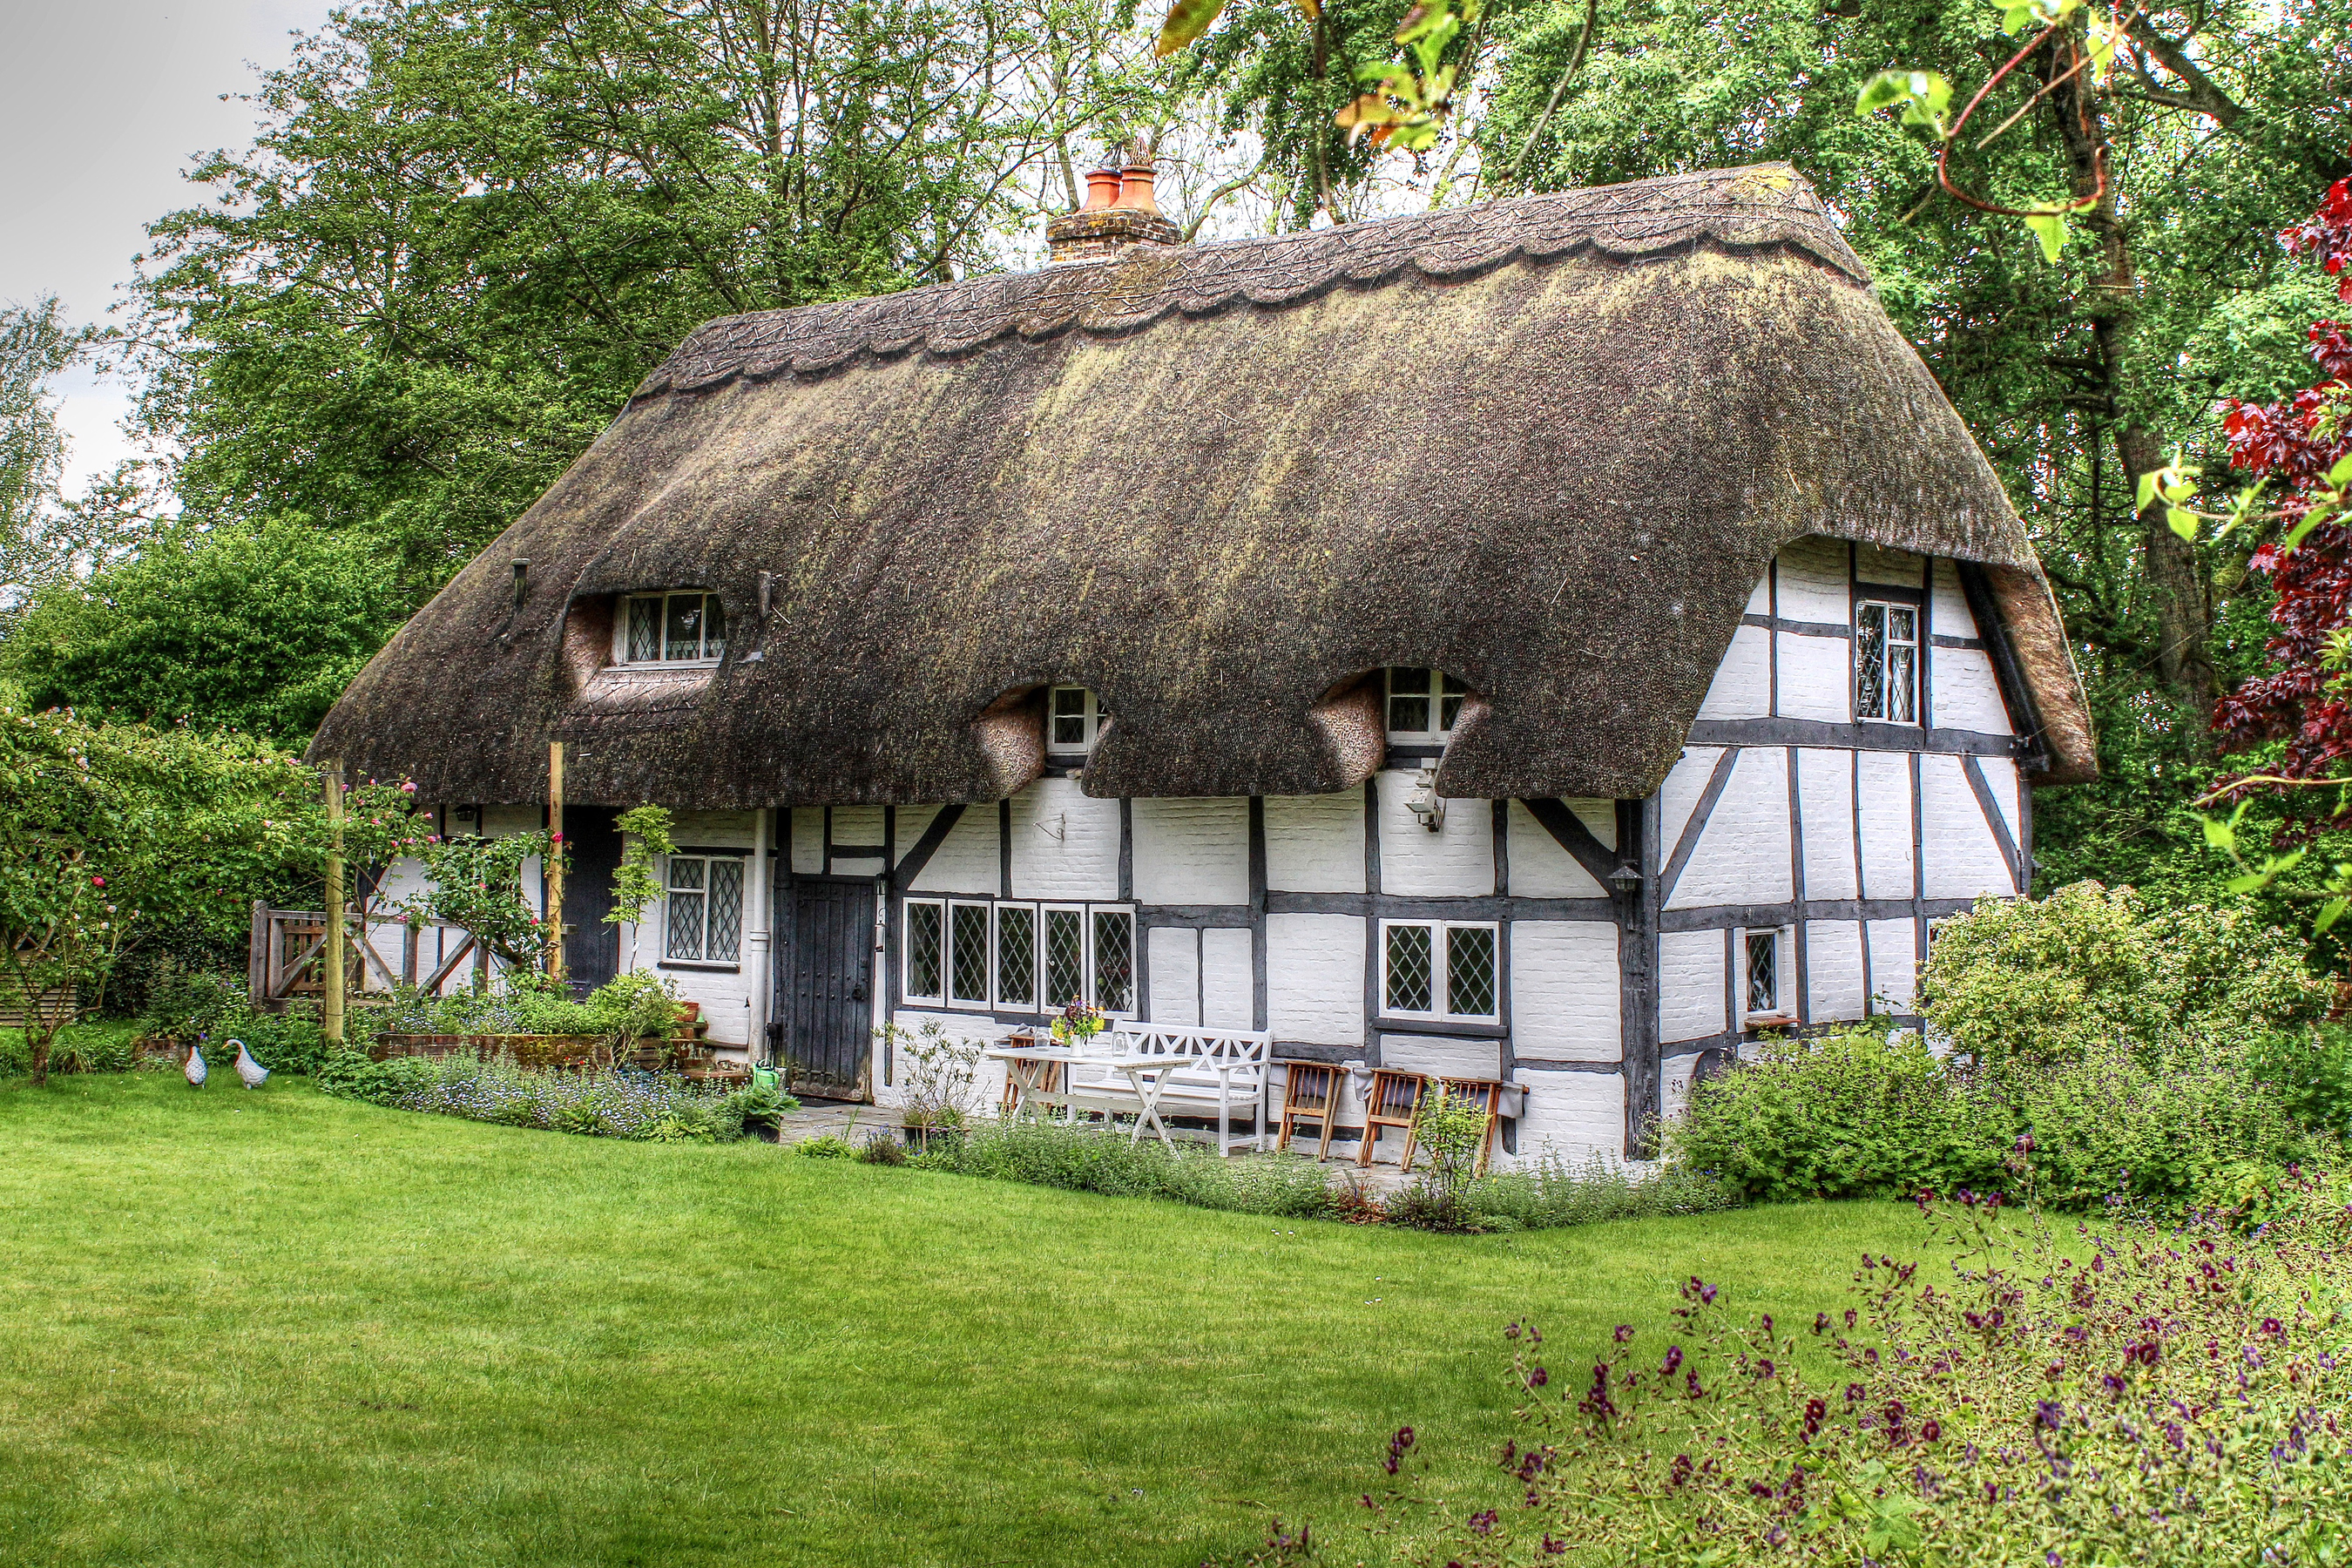 Хата 4 буквы. Thatched Cottage in Hampshire England. Традиционное жилище венгров. Фахверк Мазанка. Мазанки домики.